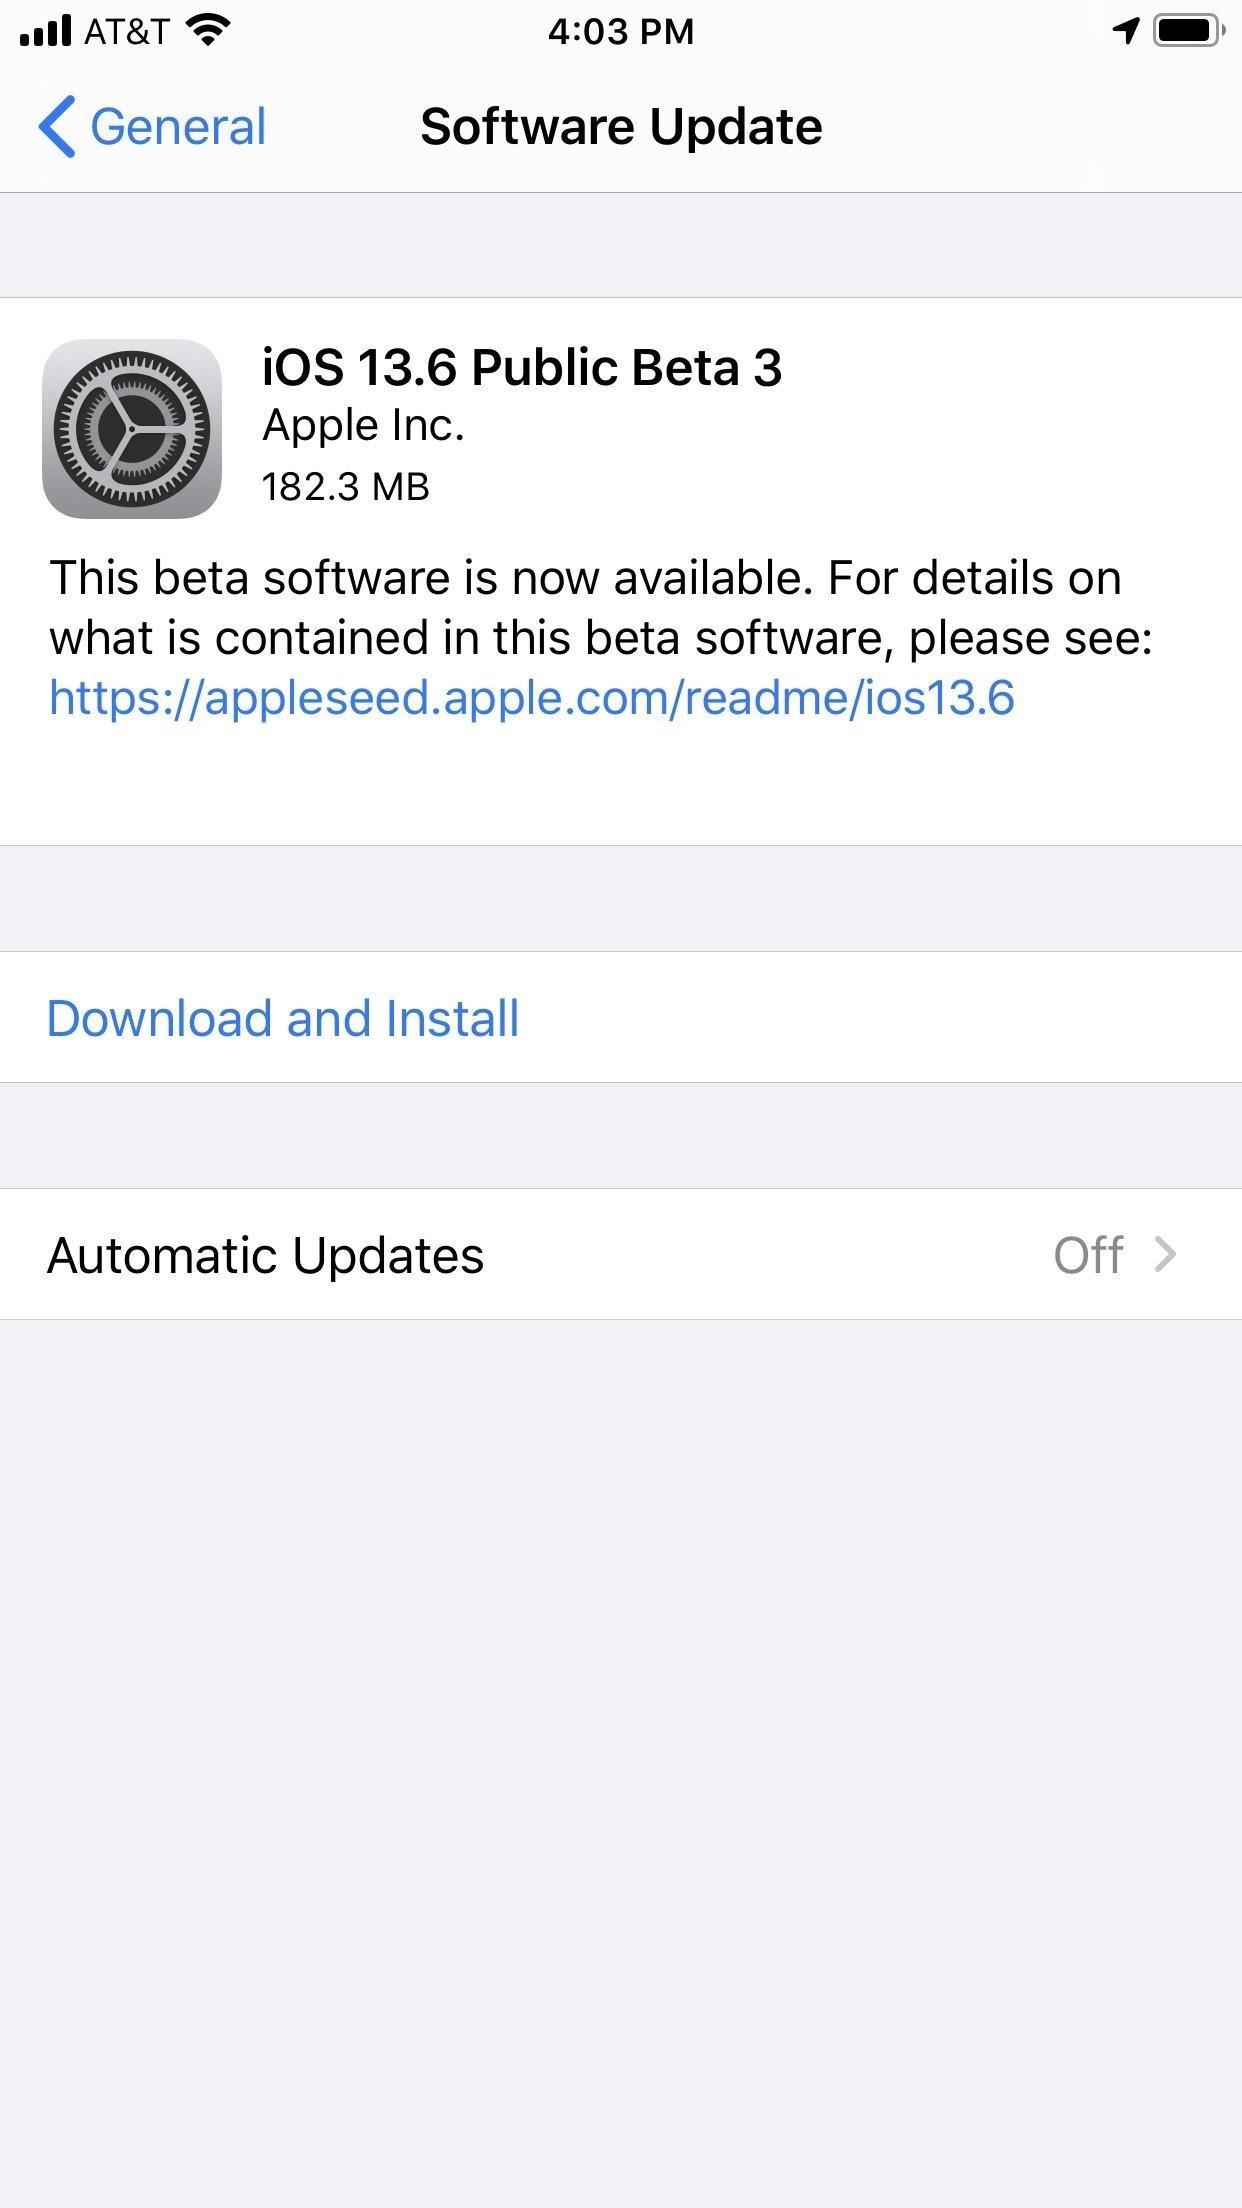 Apple Releases iOS 13.6 Public Beta 3 for iPhone